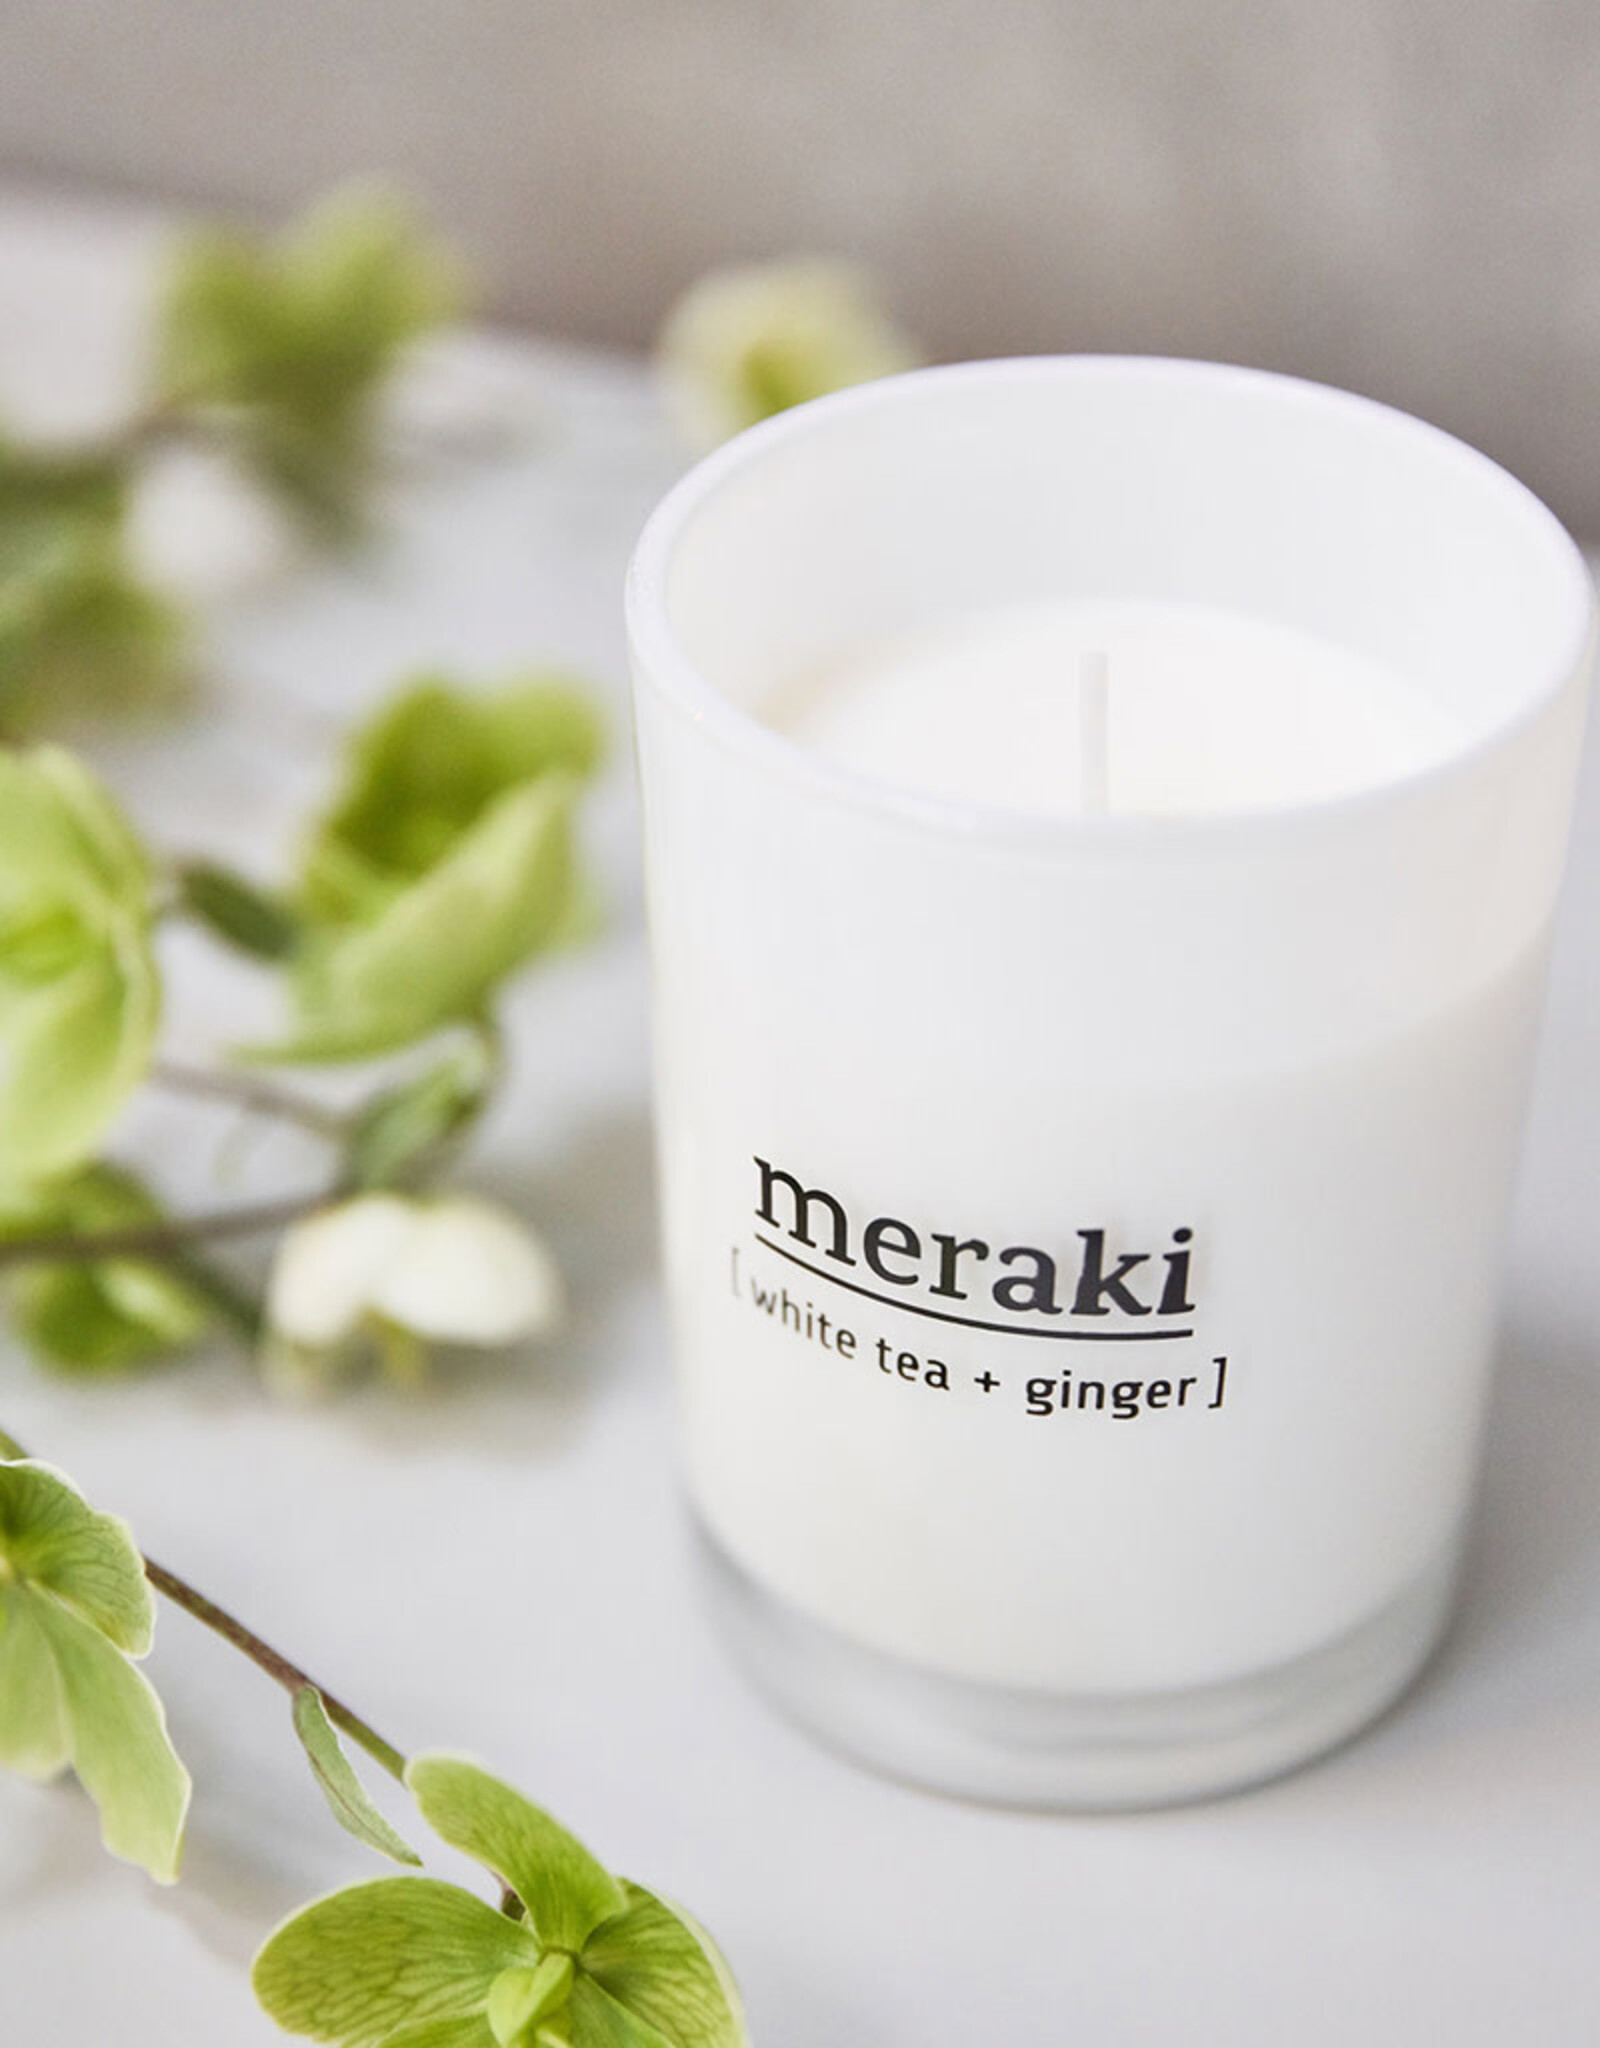 Meraki Scented Candle - L - White Tea & Ginger